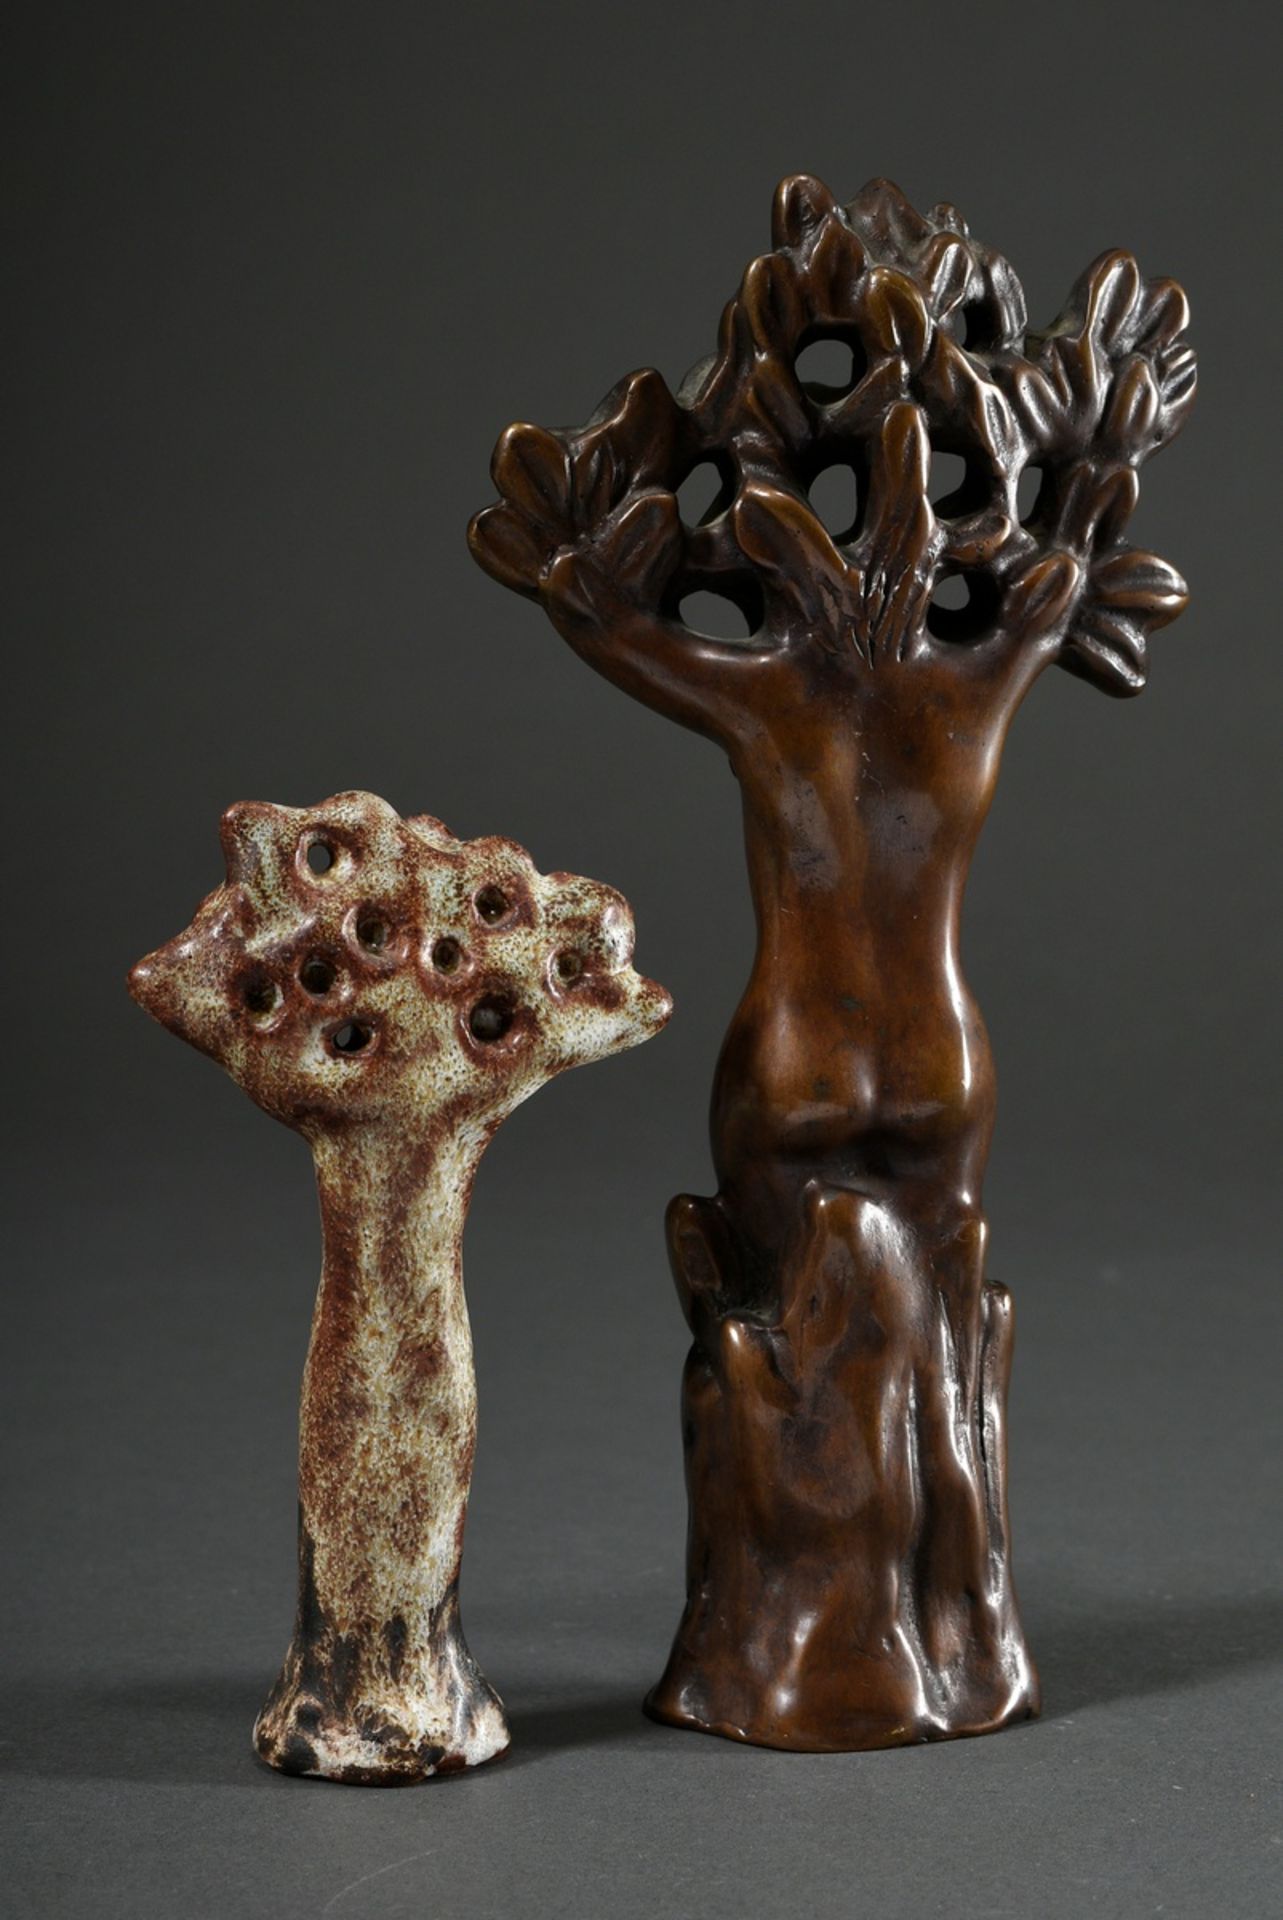 2 Various Maetzel, Monika (1917-2010) figures "Daphne", bronze patinated/ceramic glazed, in the bot - Image 2 of 3